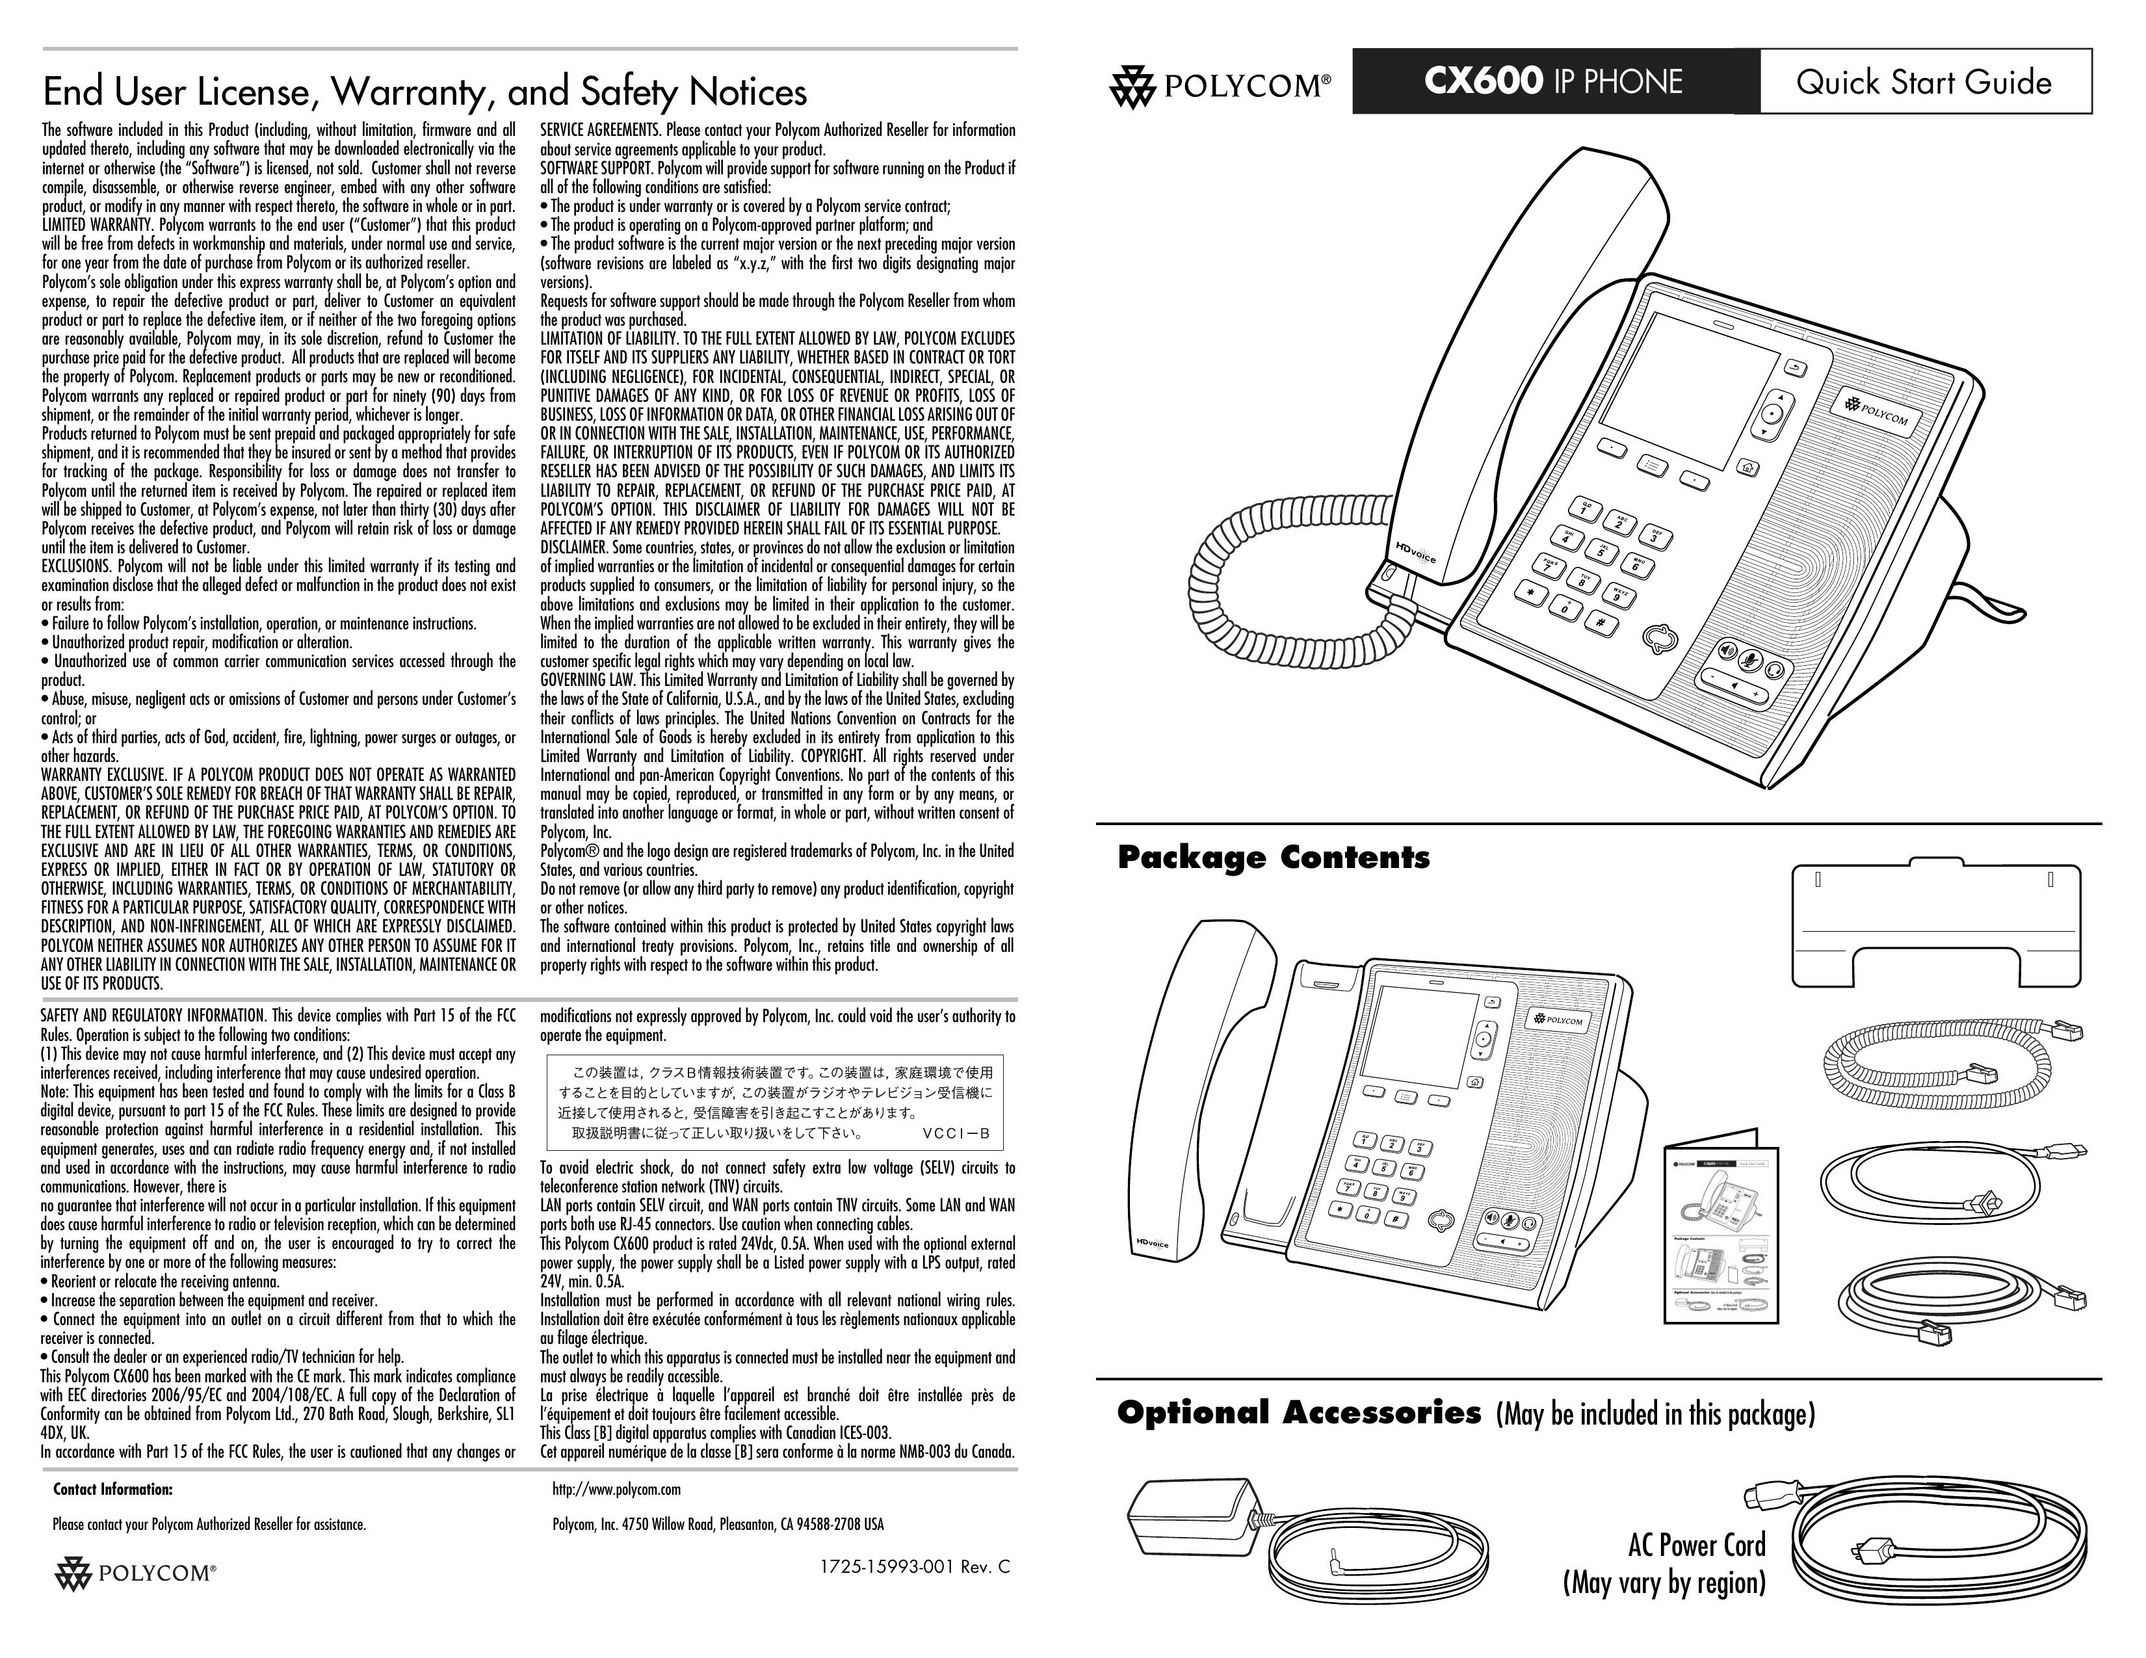 Polycom 1725-15993-001 IP Phone User Manual